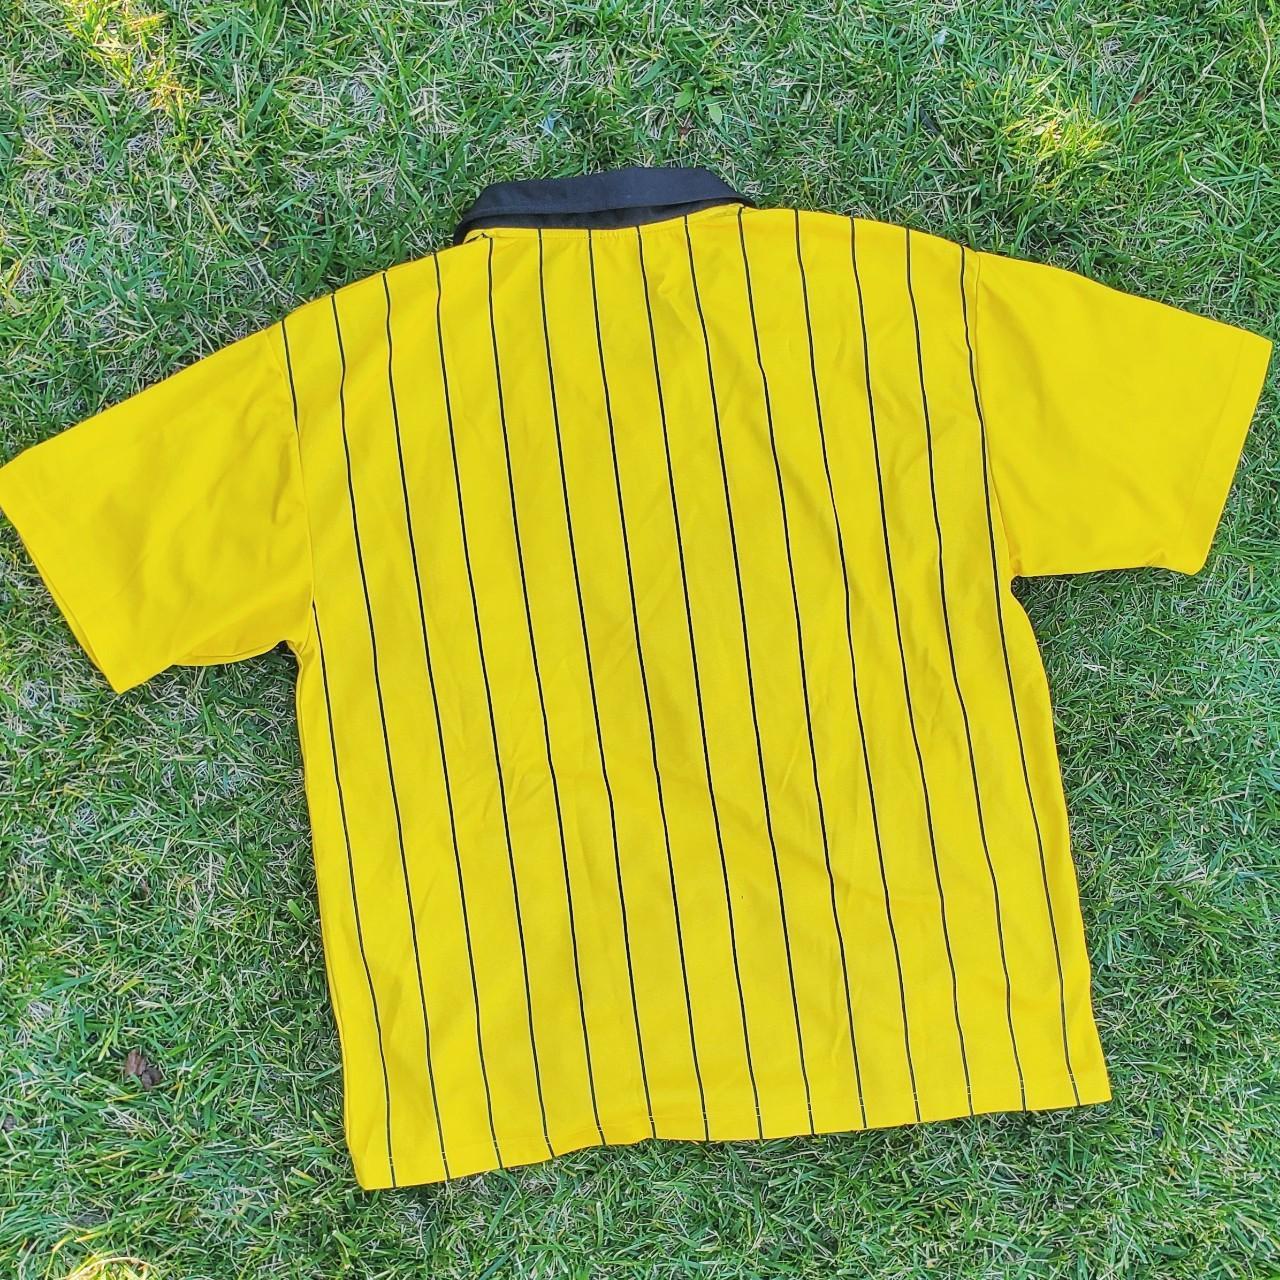 Product Image 4 - Olympus referee shirt. Velcro pockets.